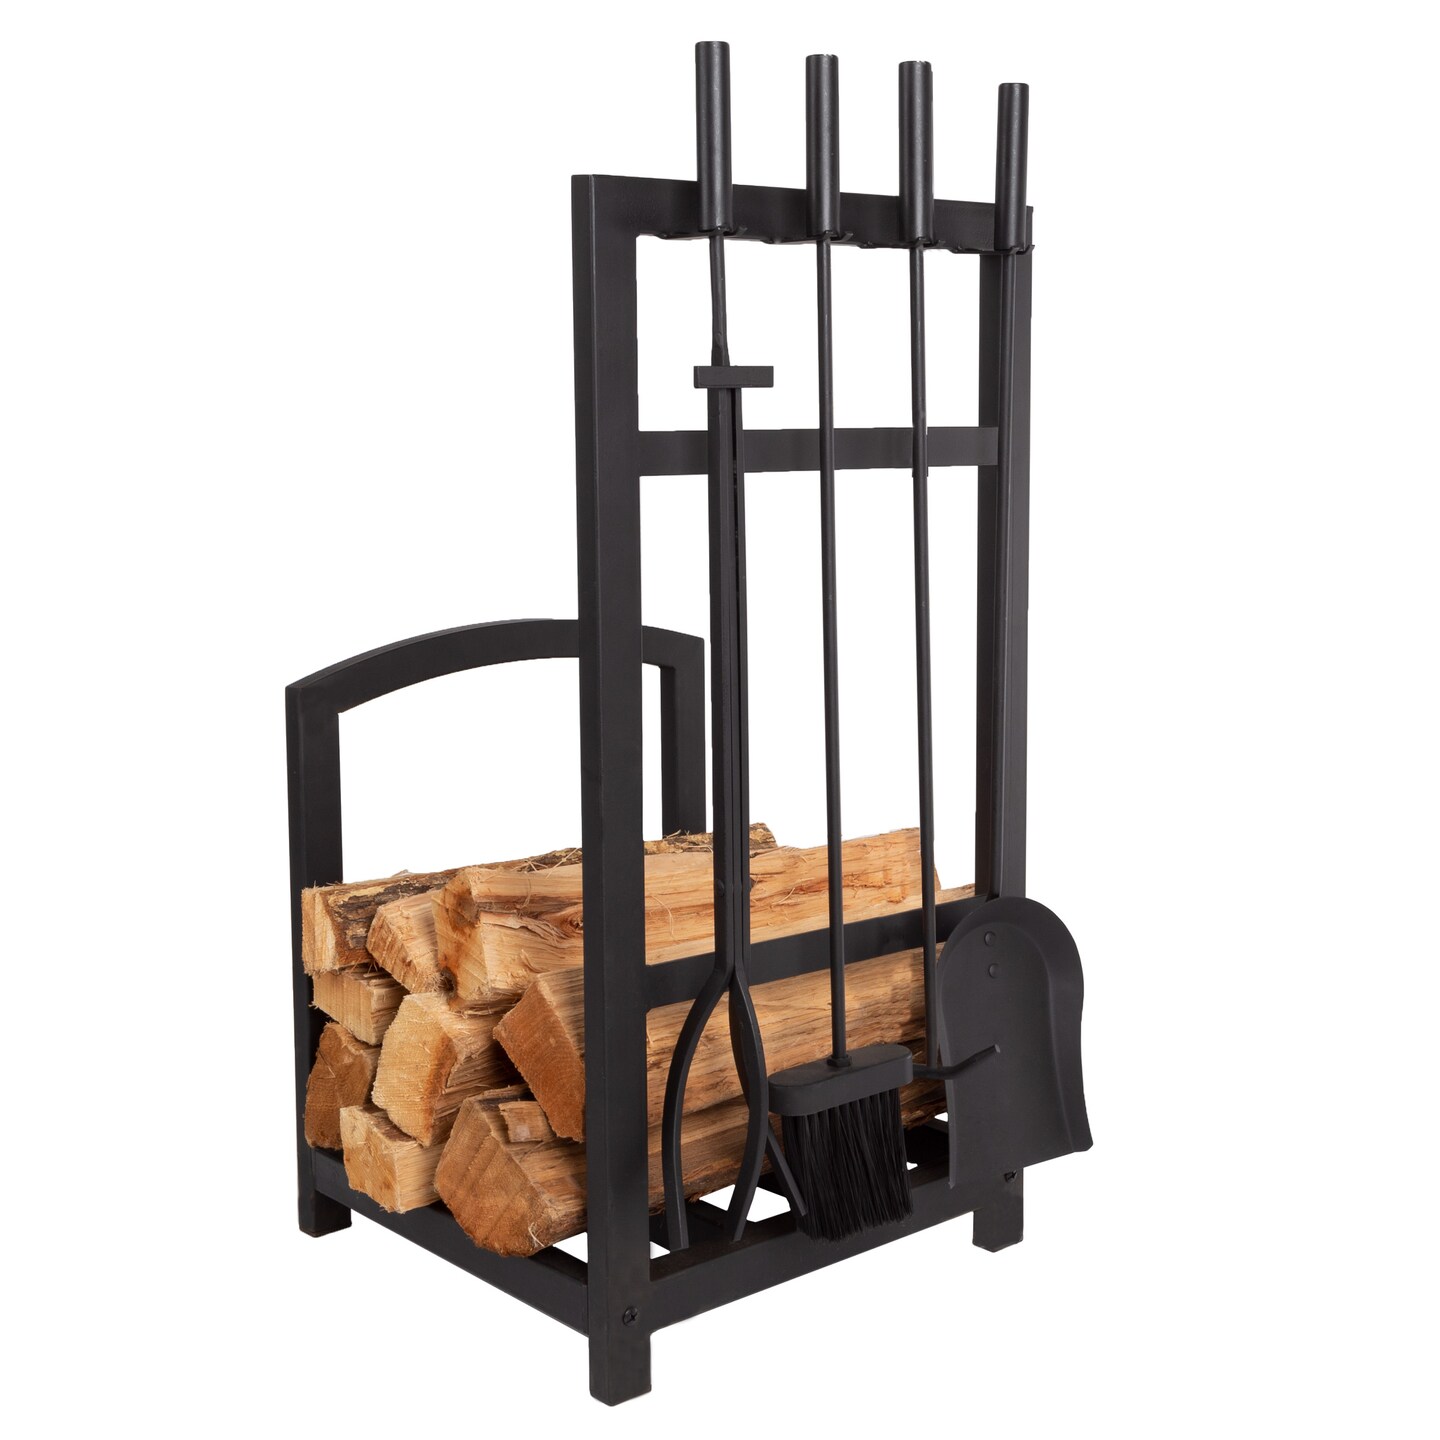 Lavish Home Fireplace Tool Set and Log Rack - Matte Black Mission Style Firewood Holder